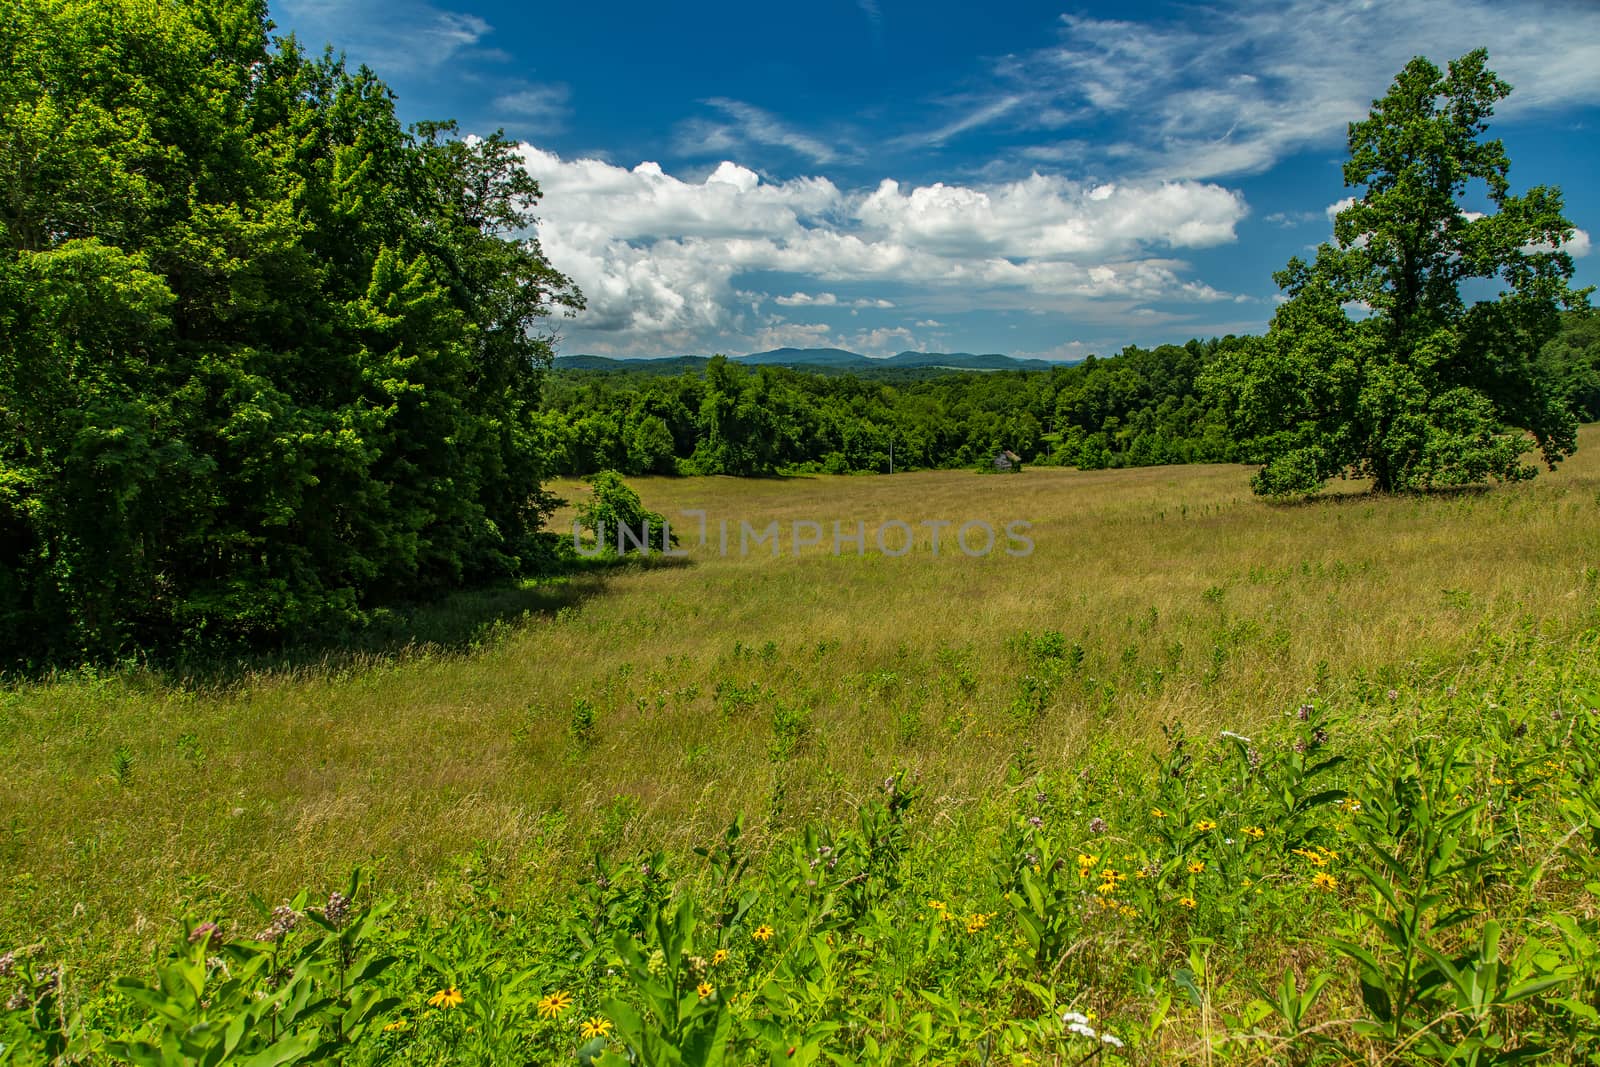 Virginia Summer Meadow by adifferentbrian